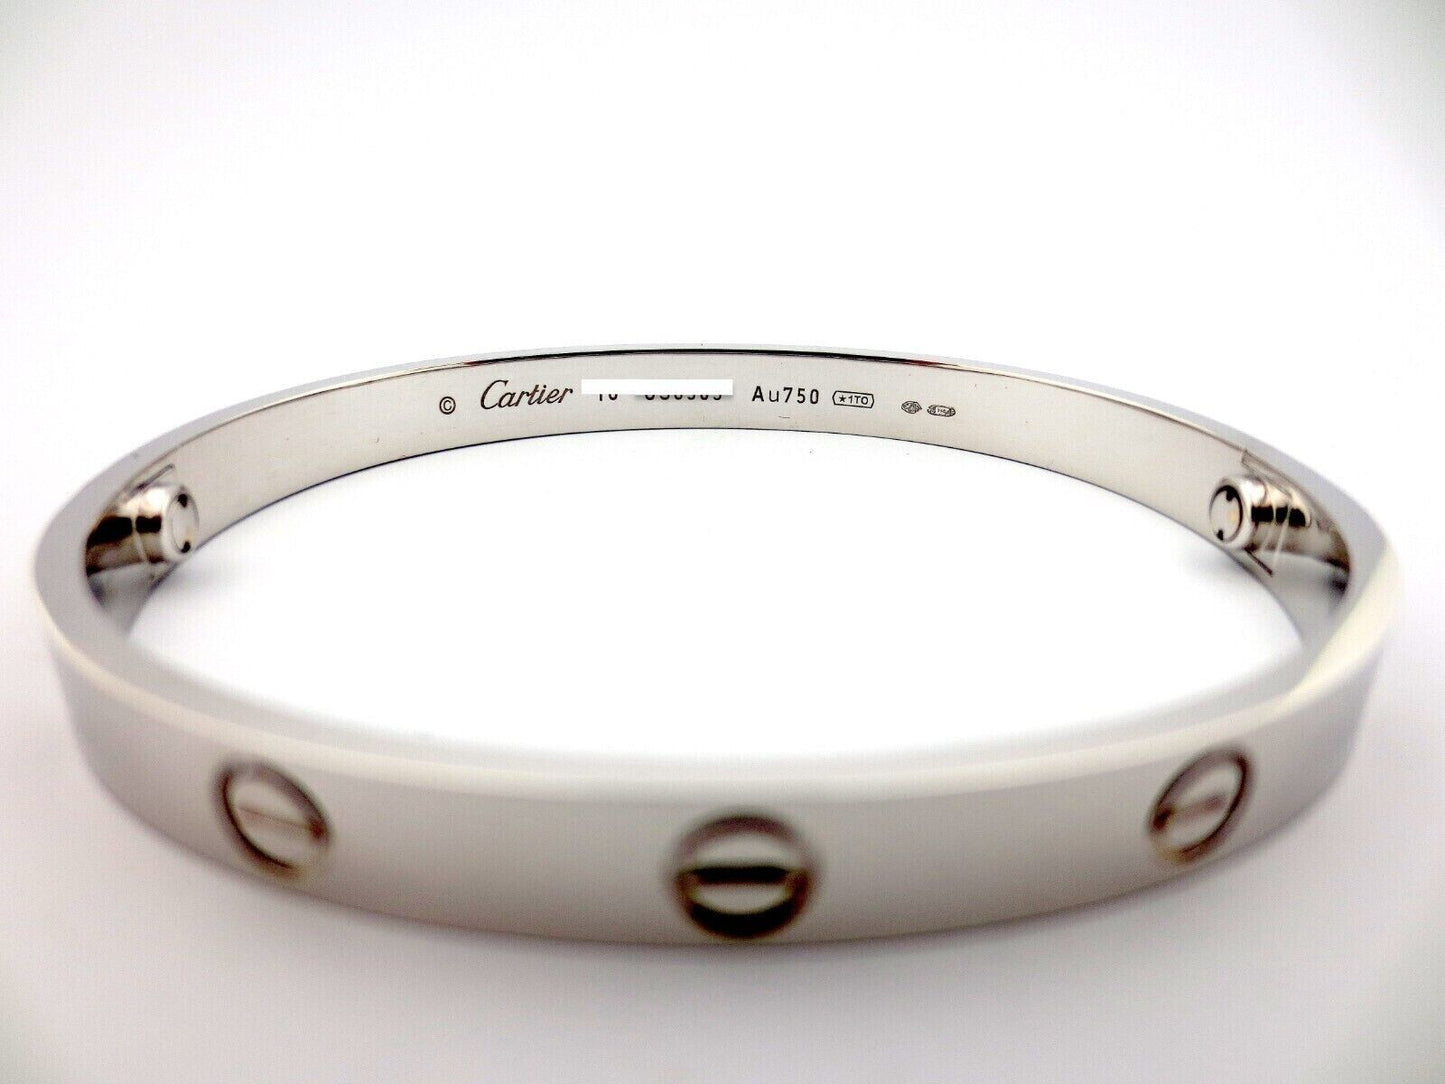 Authentic Cartier 18K White Gold Love Bracelet Bangle Size 18 NEW SCREW SYSTEM